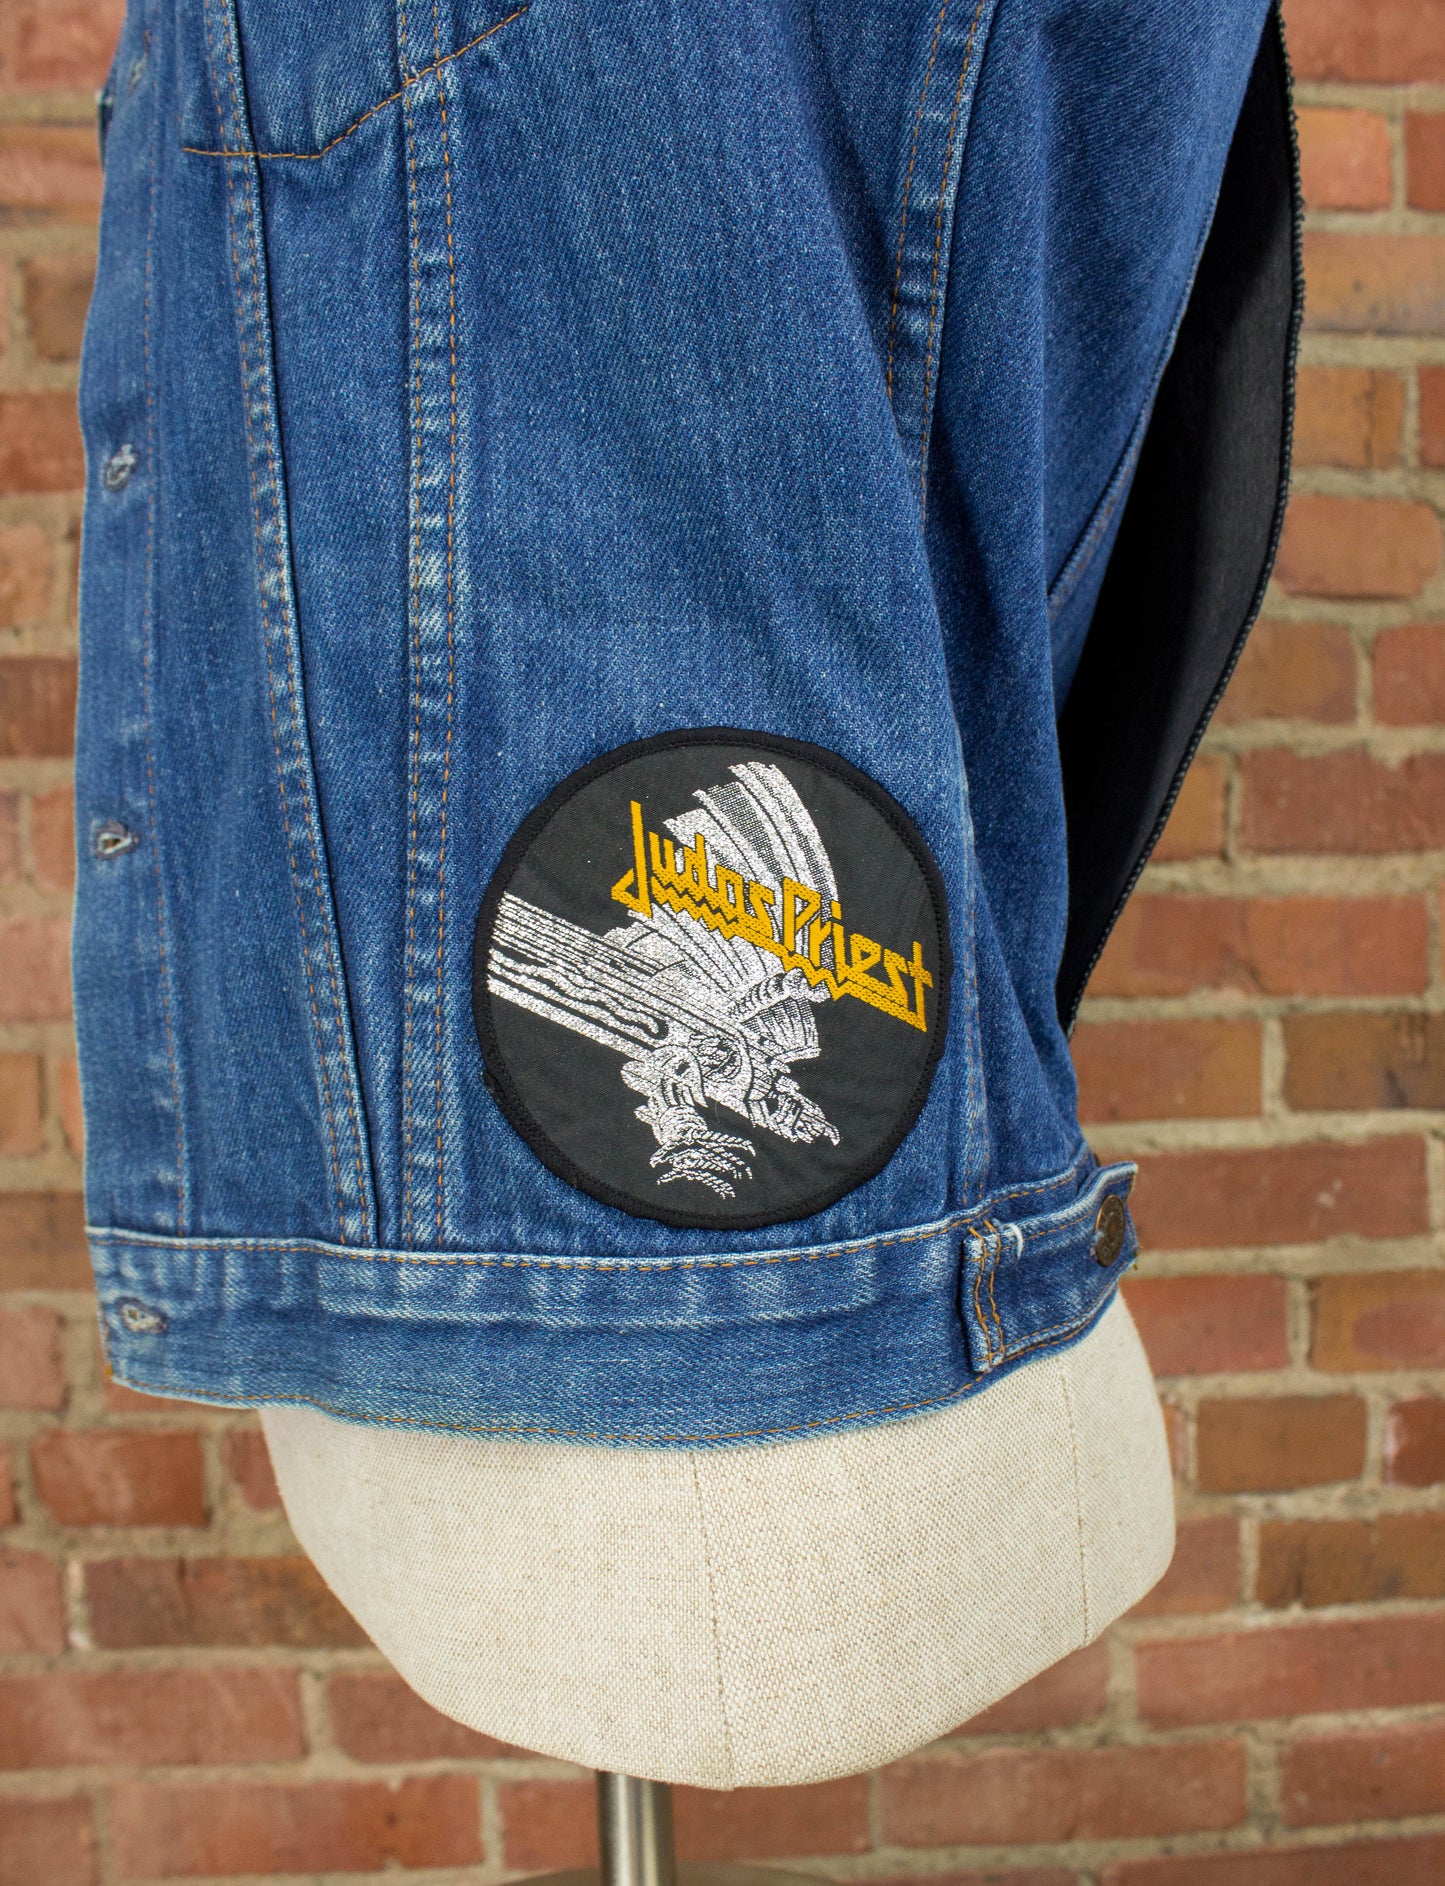 Vintage Levi's Custom Denim Vest 80s Iron Maiden AC/DC Back Patch Heavy Metal UK Small-Medium